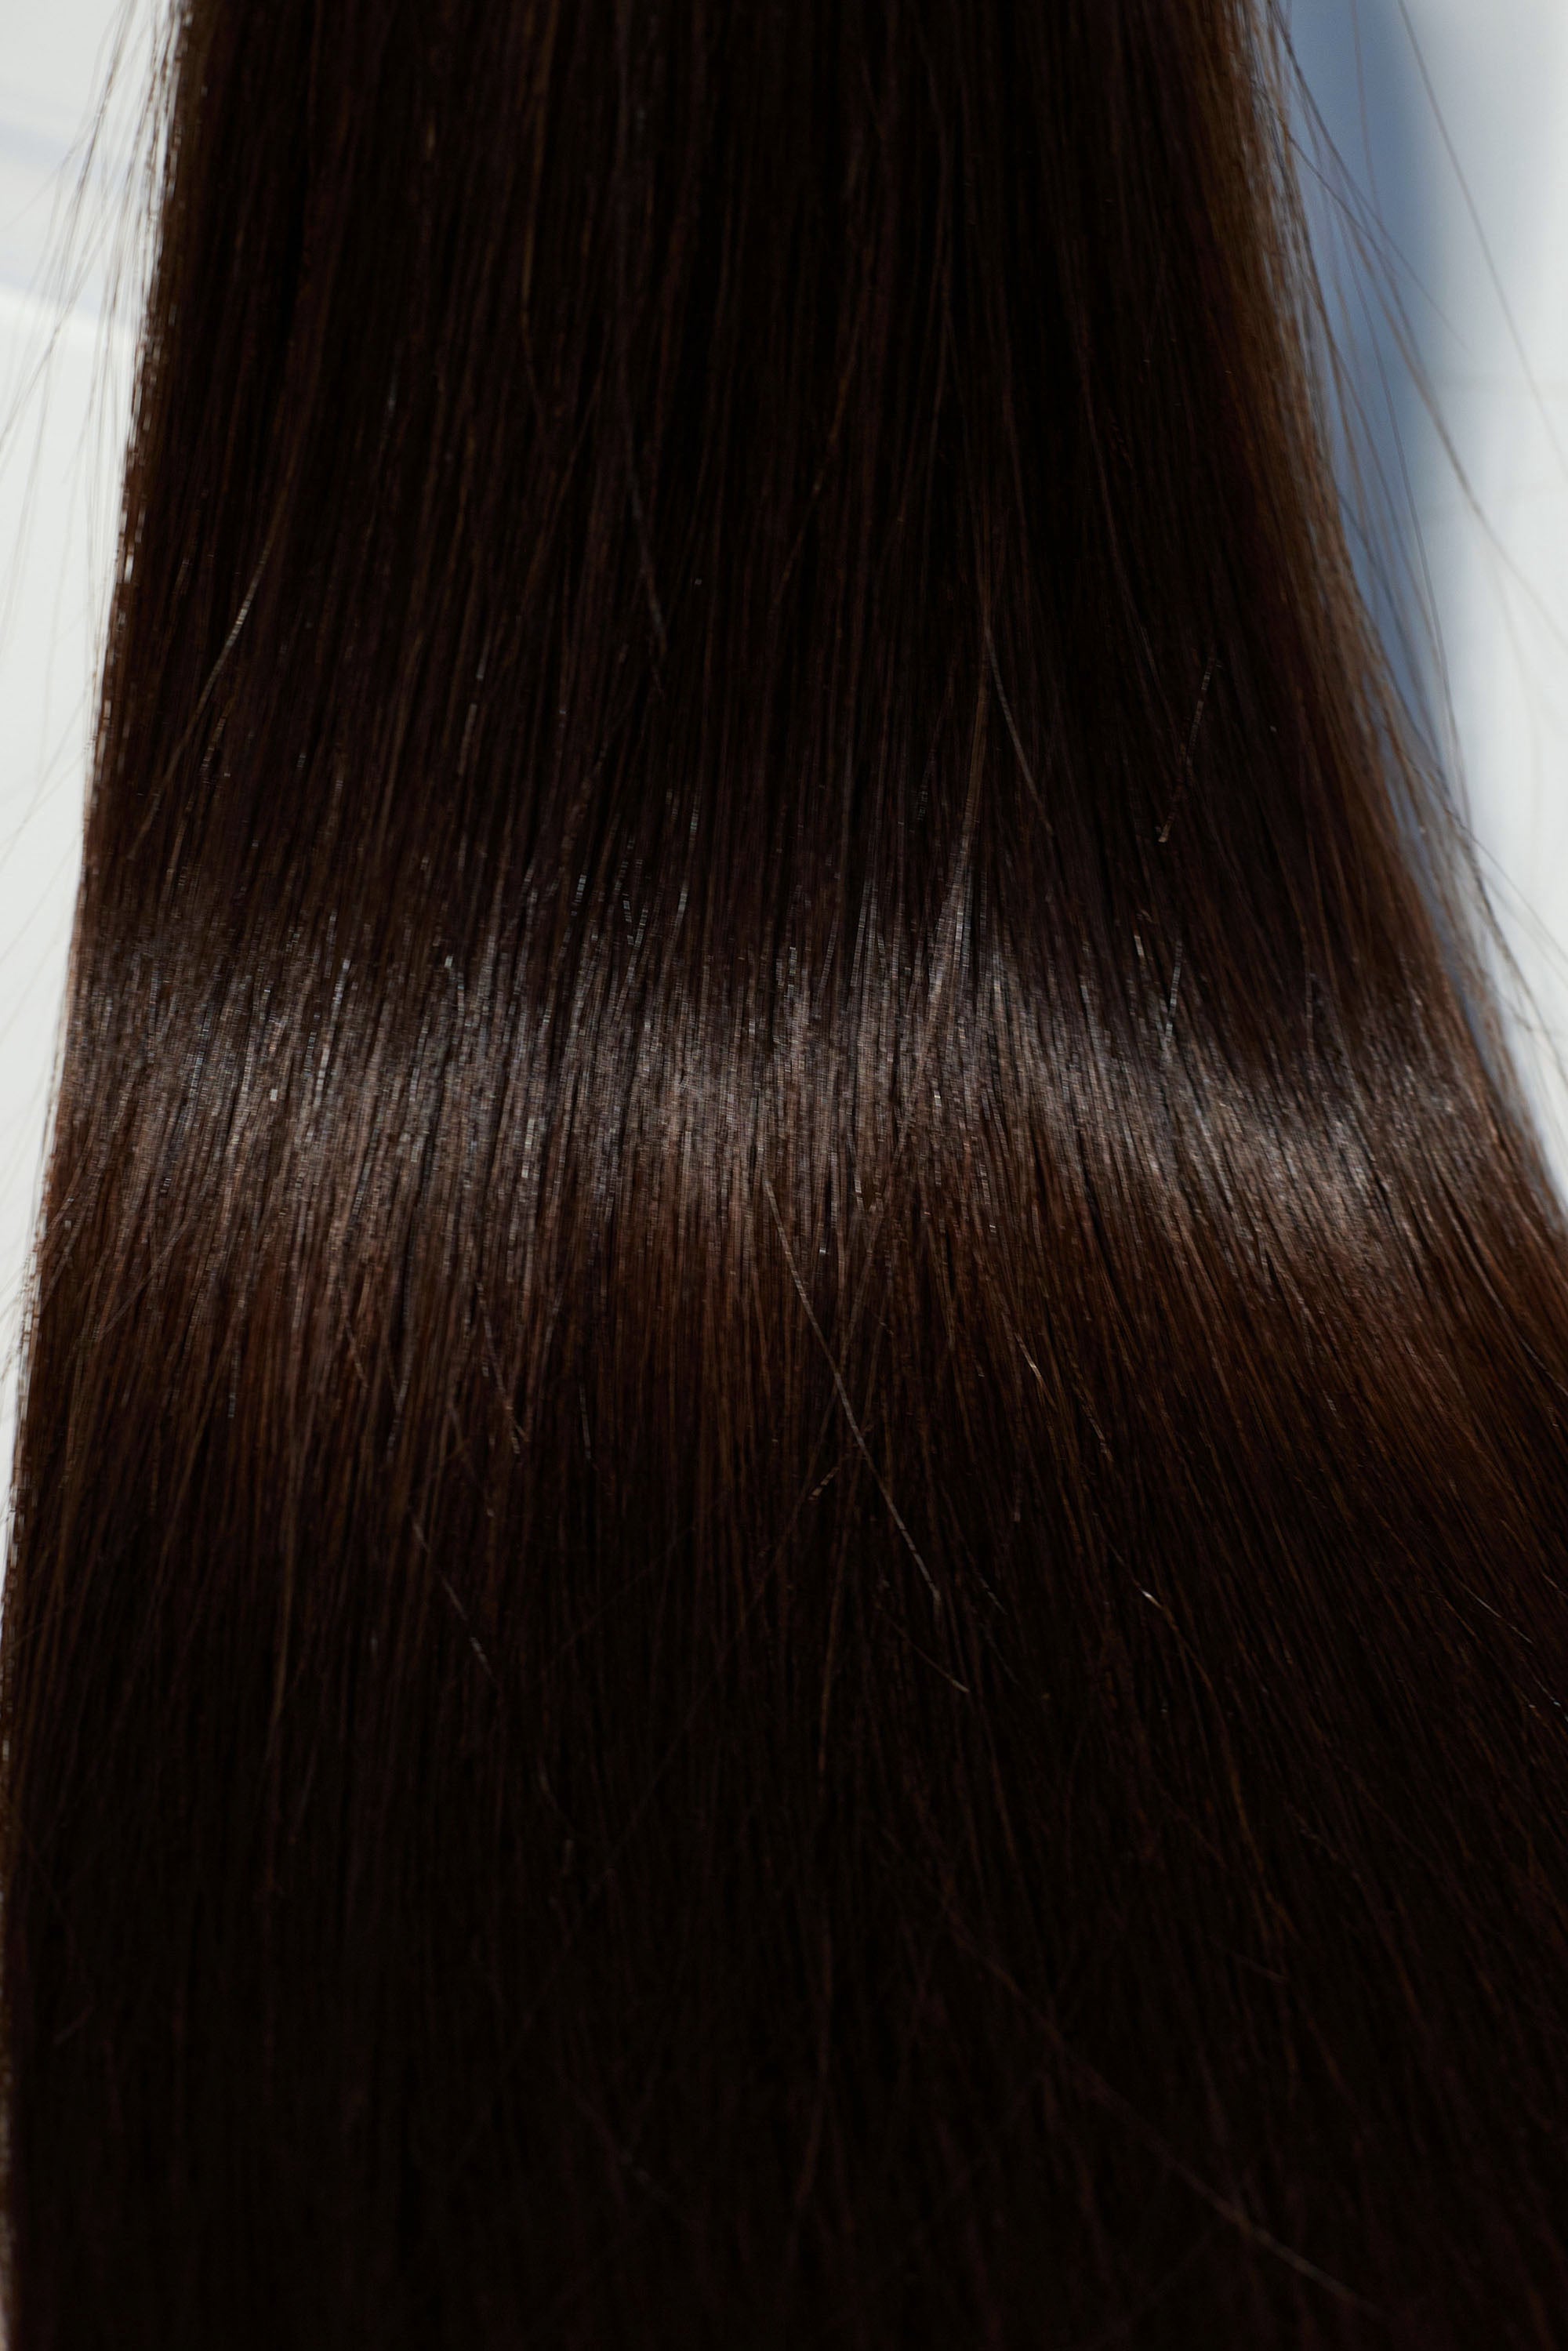 Behair professional Keratin Tip "Premium" 22" (55cm) Natural Straight Dark Coffee Brown #2 - 25g (Standart - 0.7g each pcs) hair extensions